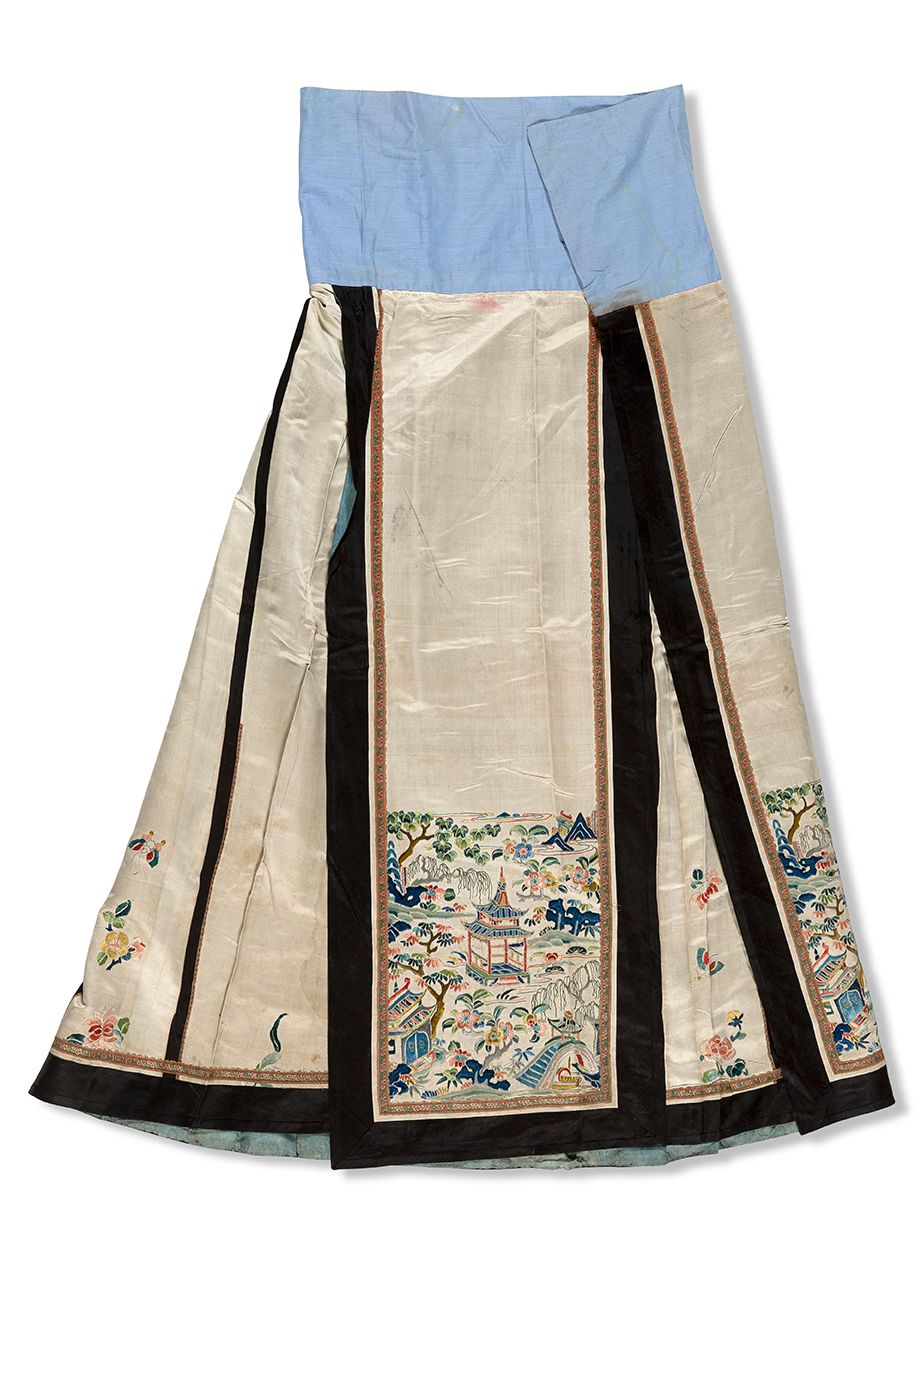 CHINE VERS 1900 Skirt (mang qun)
Cream silk satin with polychrome thread embroid&hellip;